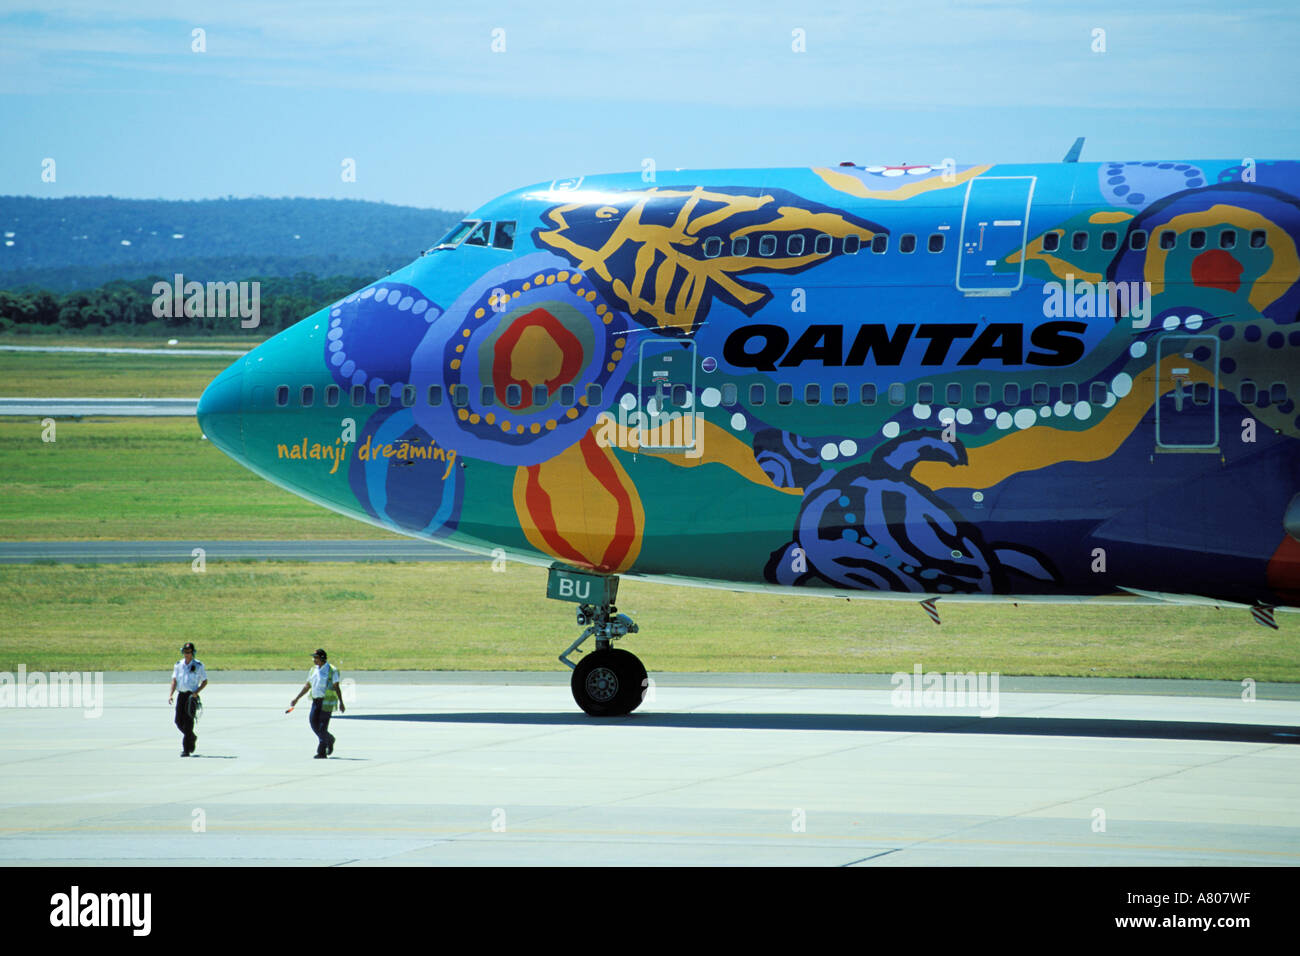 Australia, Sydney, Nalanji dreaming, plane of Qantas, aboriginal art Stock Photo